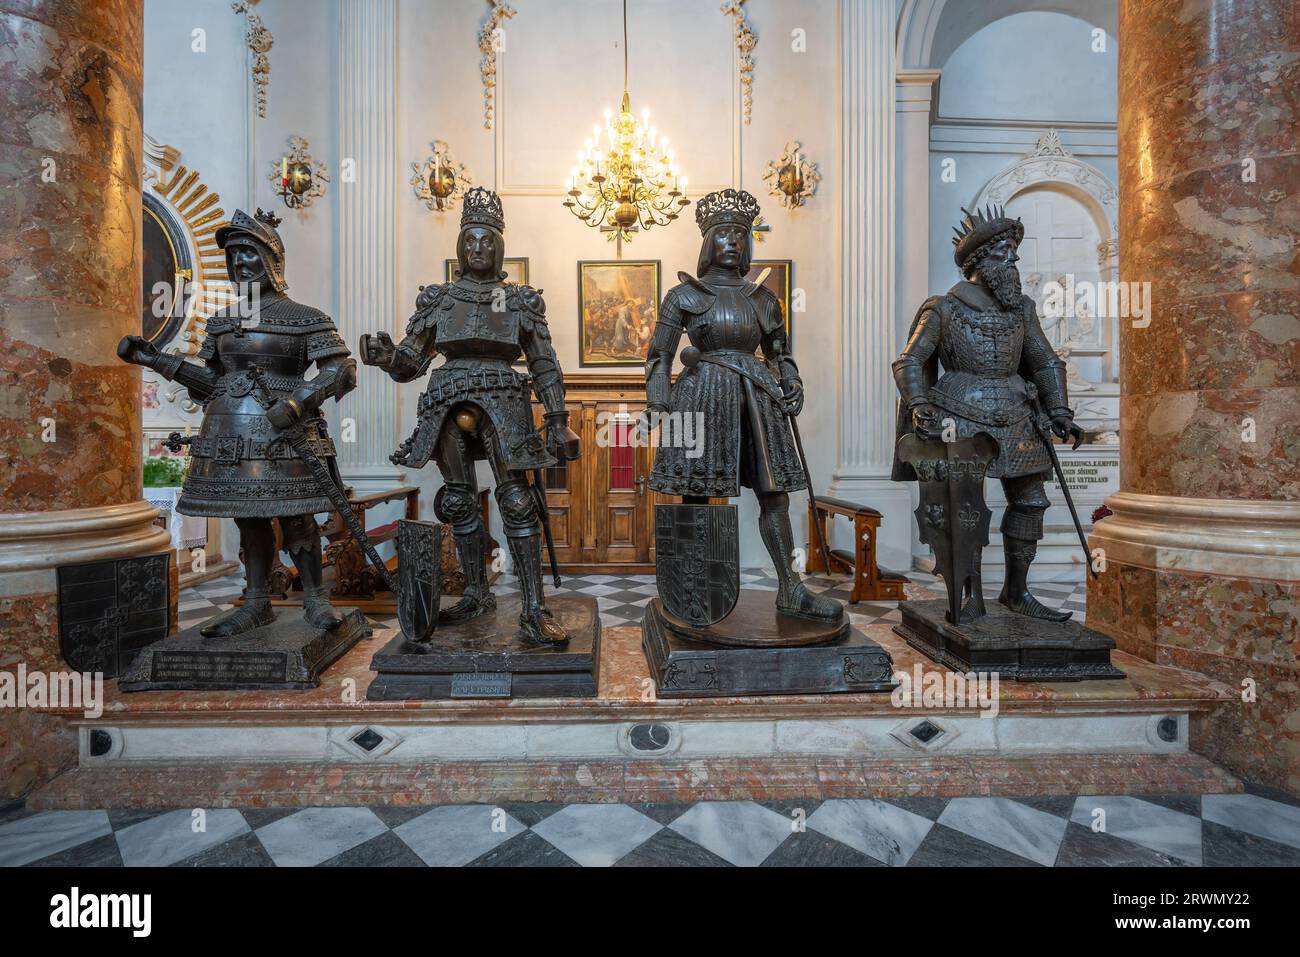 Statues of Duke Albert II, Kings Rudolph I, Philip I and Clovis I at Hofkirche (Court Church) - Innsbruck, Austria Stock Photo